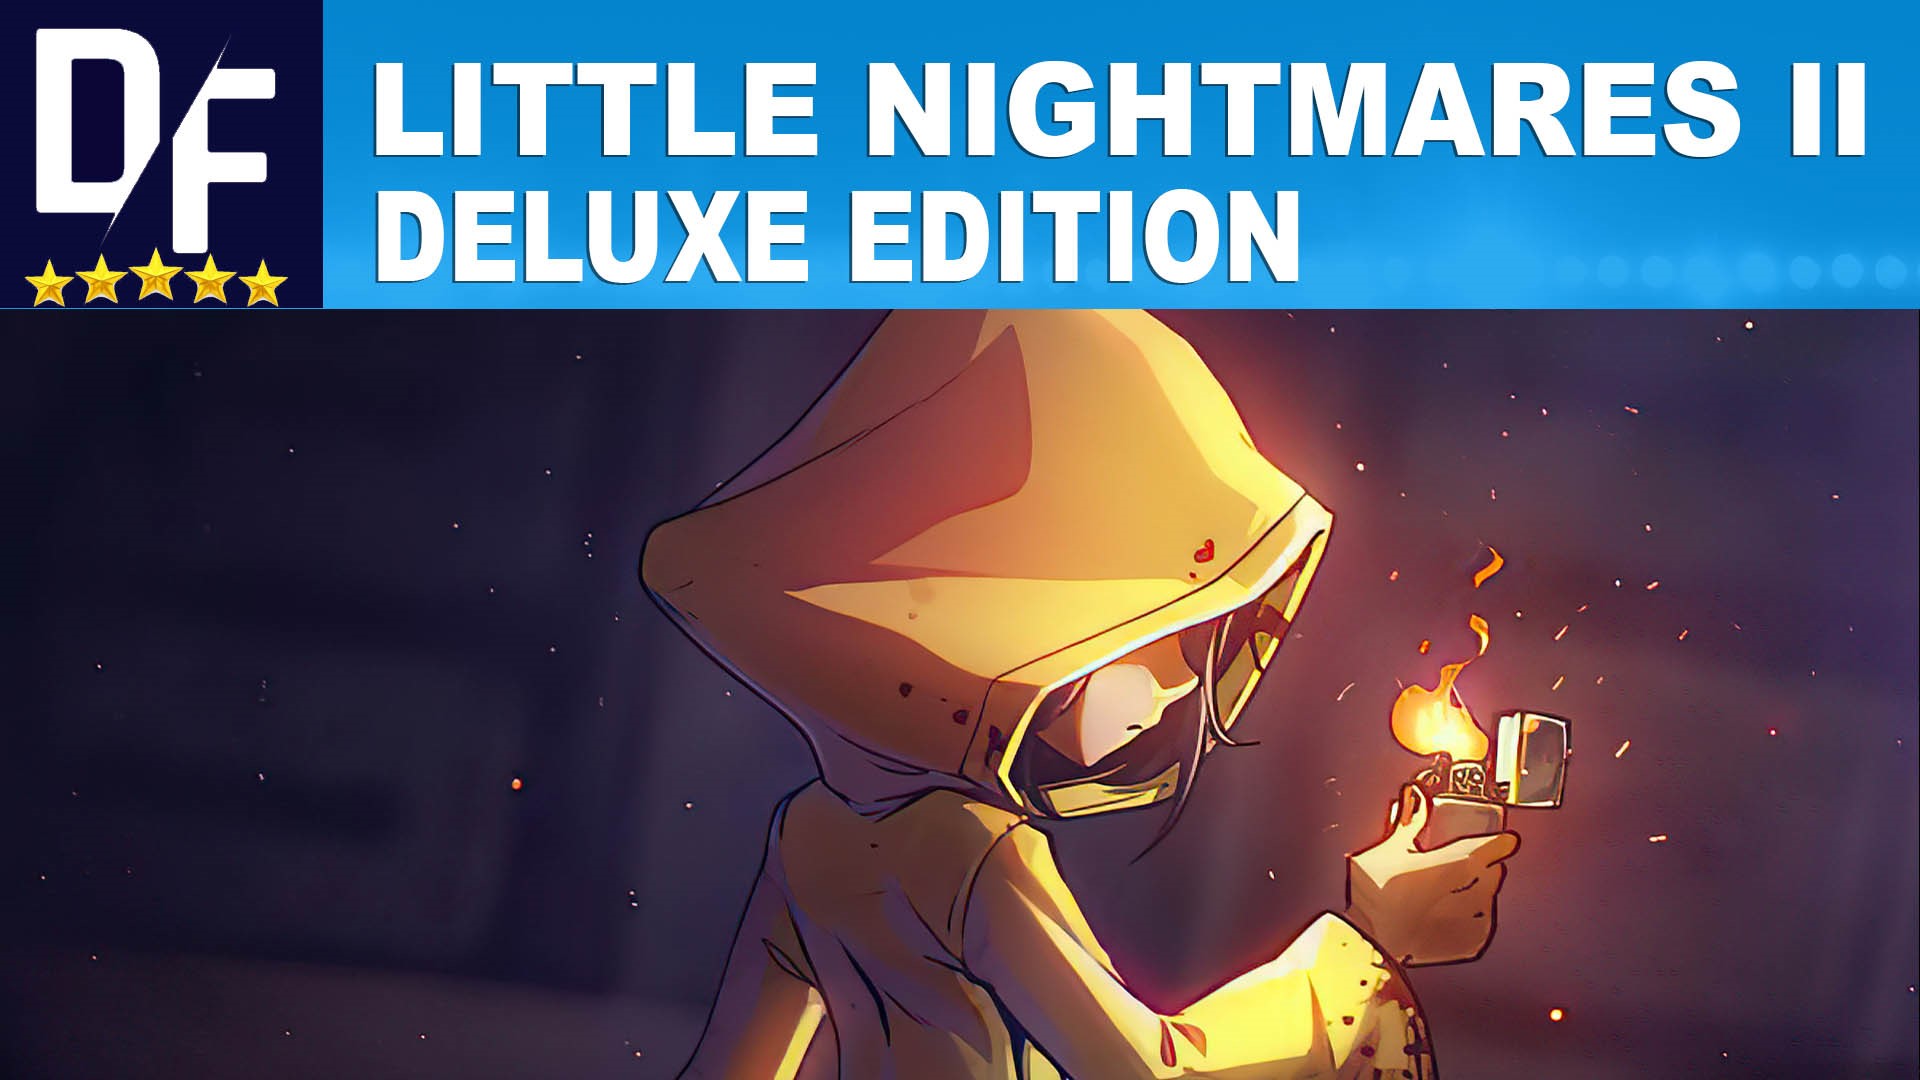 Little nightmares 2 edition. Little Nightmares II Deluxe Edition. Игра little Nightmares. Little Nightmares Deluxe Edition. Little Nightmares дополнение.